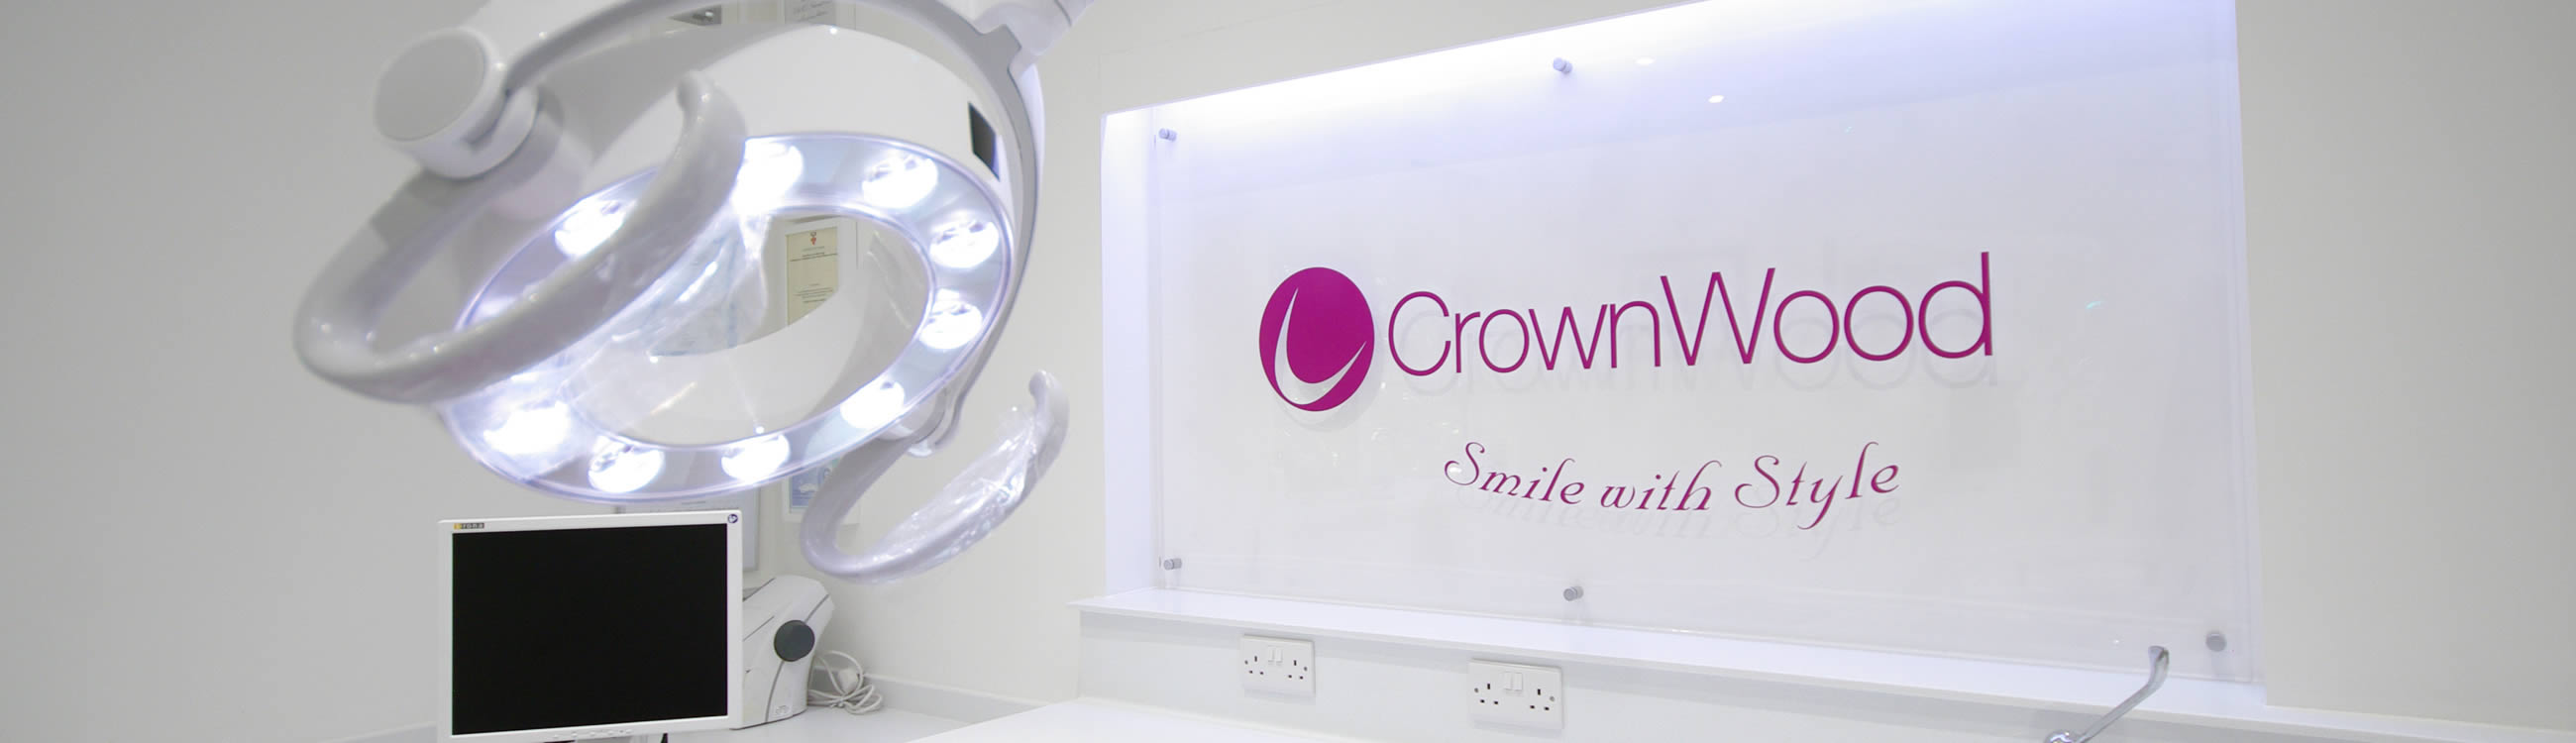 Online dental referral form for CrownWood Dental in Bracknell